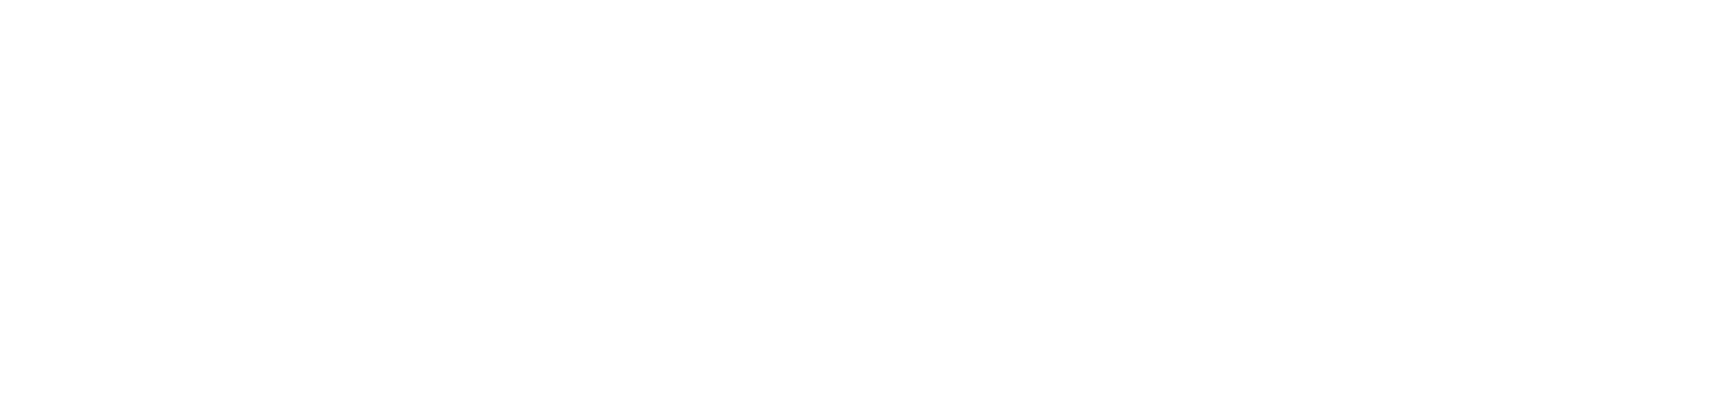 logo_BELOBABA_simbolo